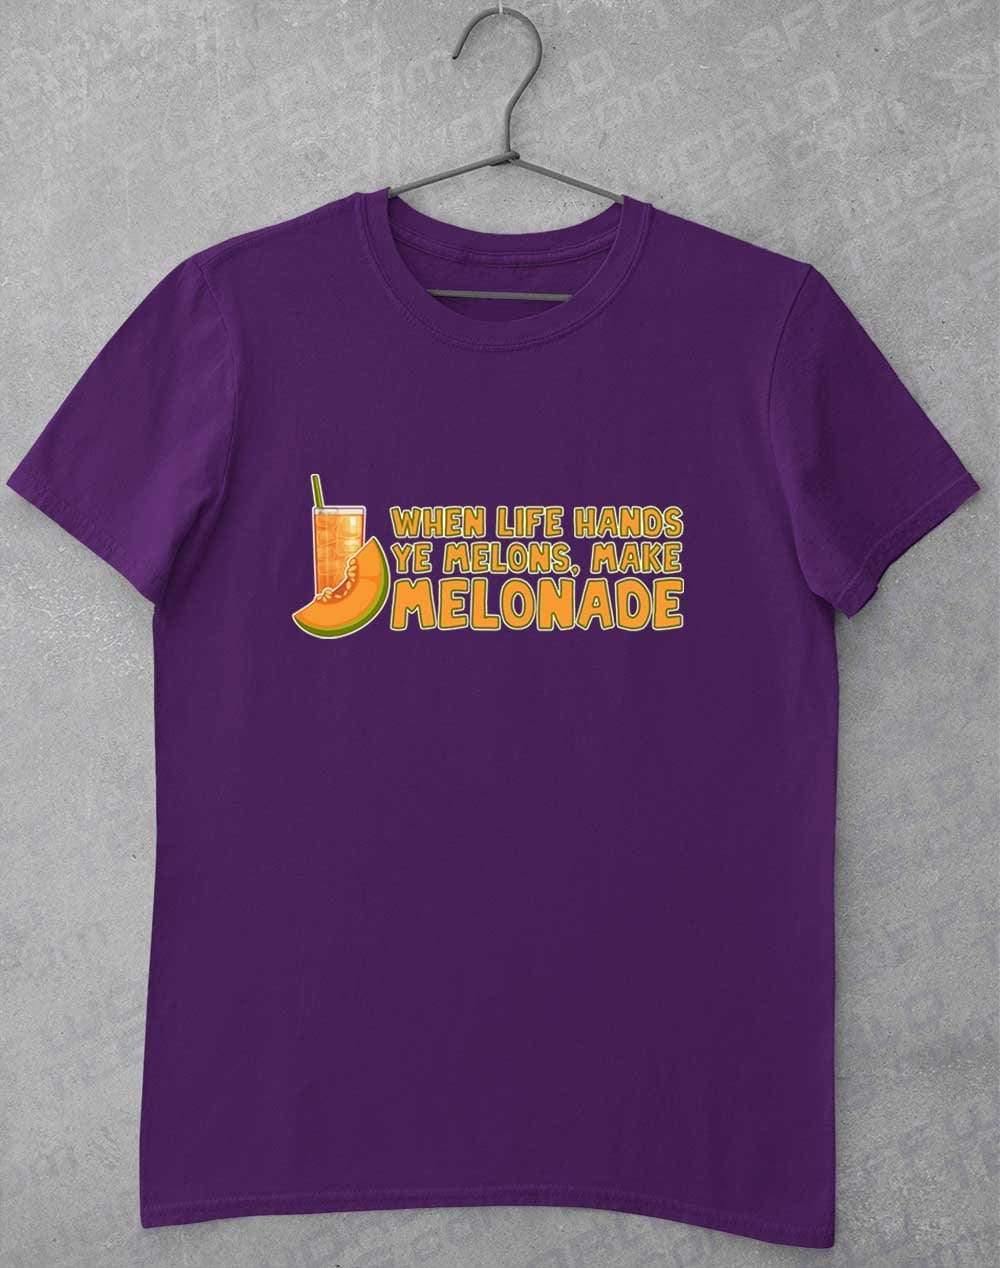 Make Melonade T-Shirt S / Purple  - Off World Tees